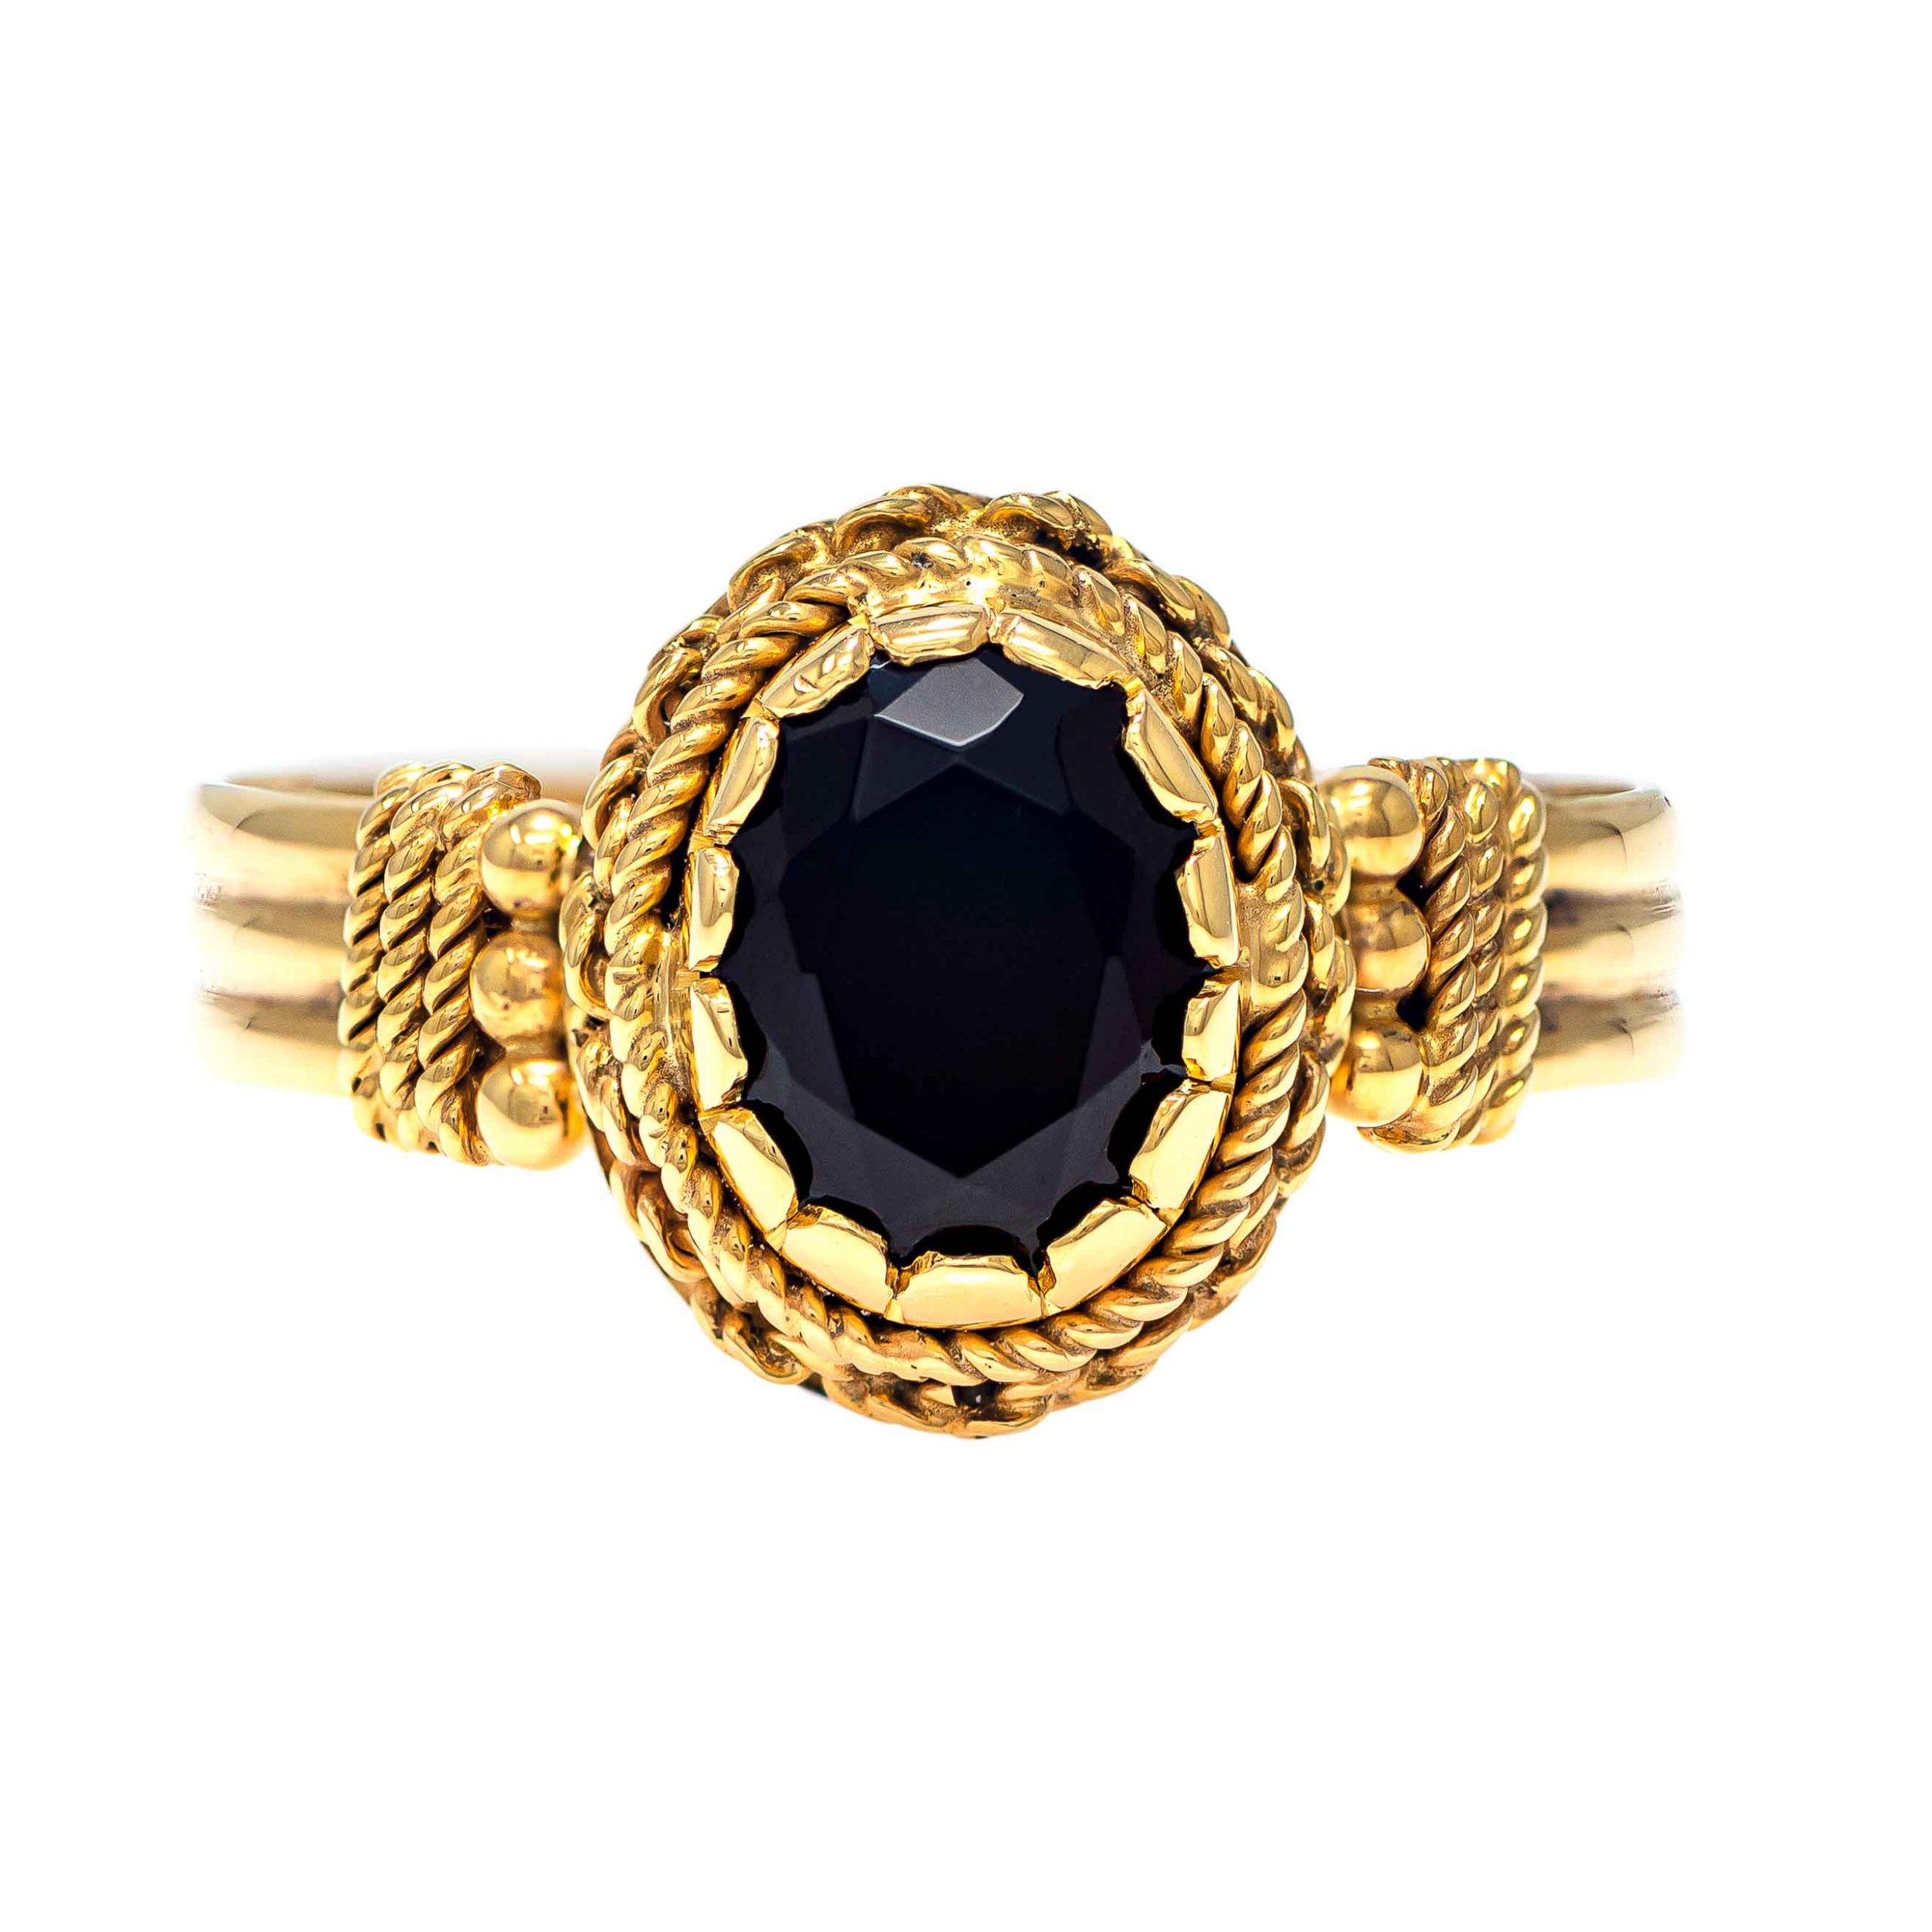 Handmade Yellow Gold 9kt Ring with Black Zirconia